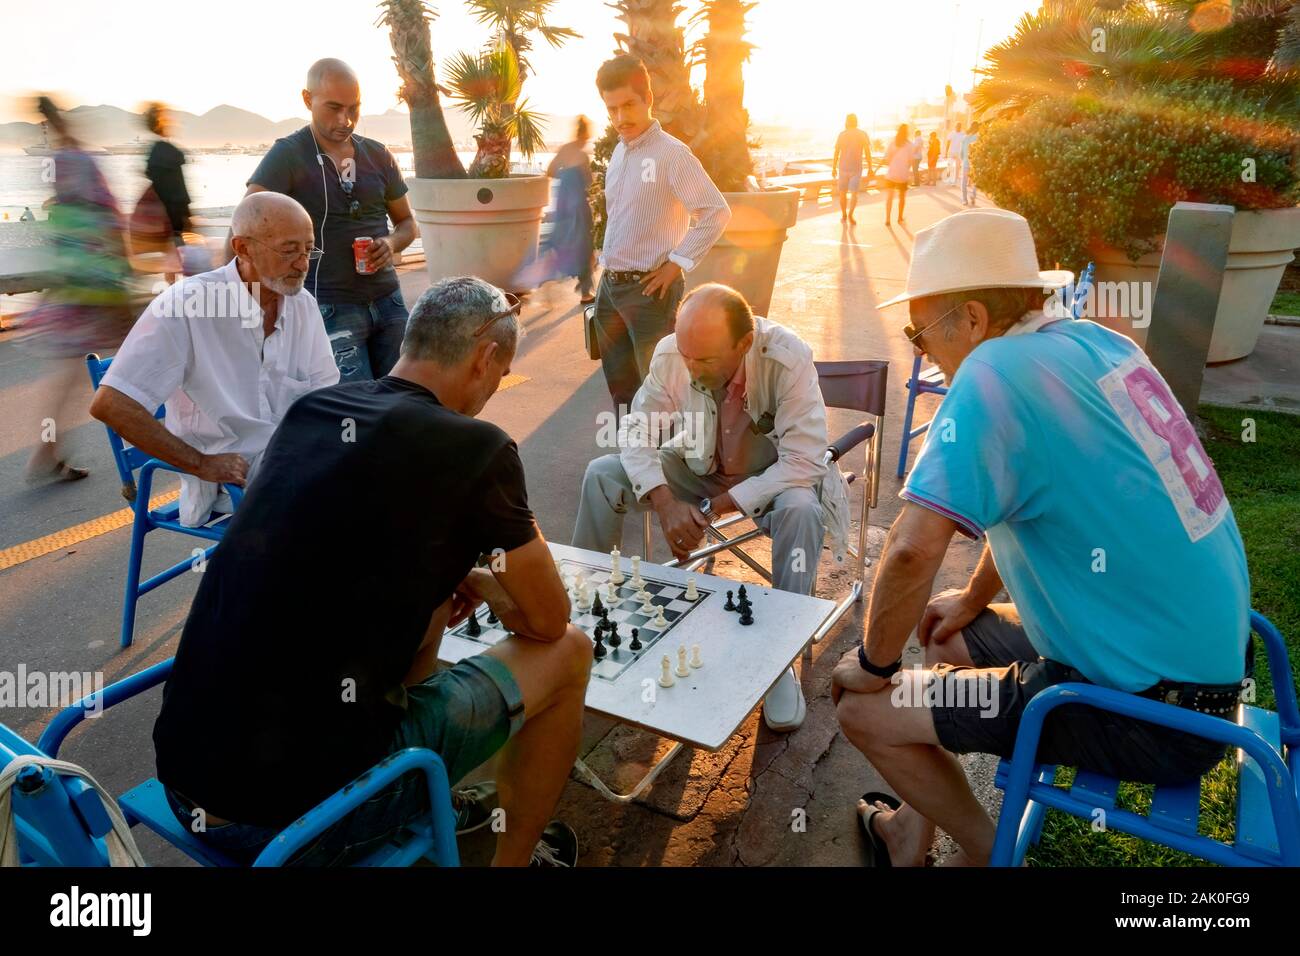 Male friends and spectators enjoy a game of chess, Boulevard de la Croisette, Cannes, Provence, France, Europe Stock Photo